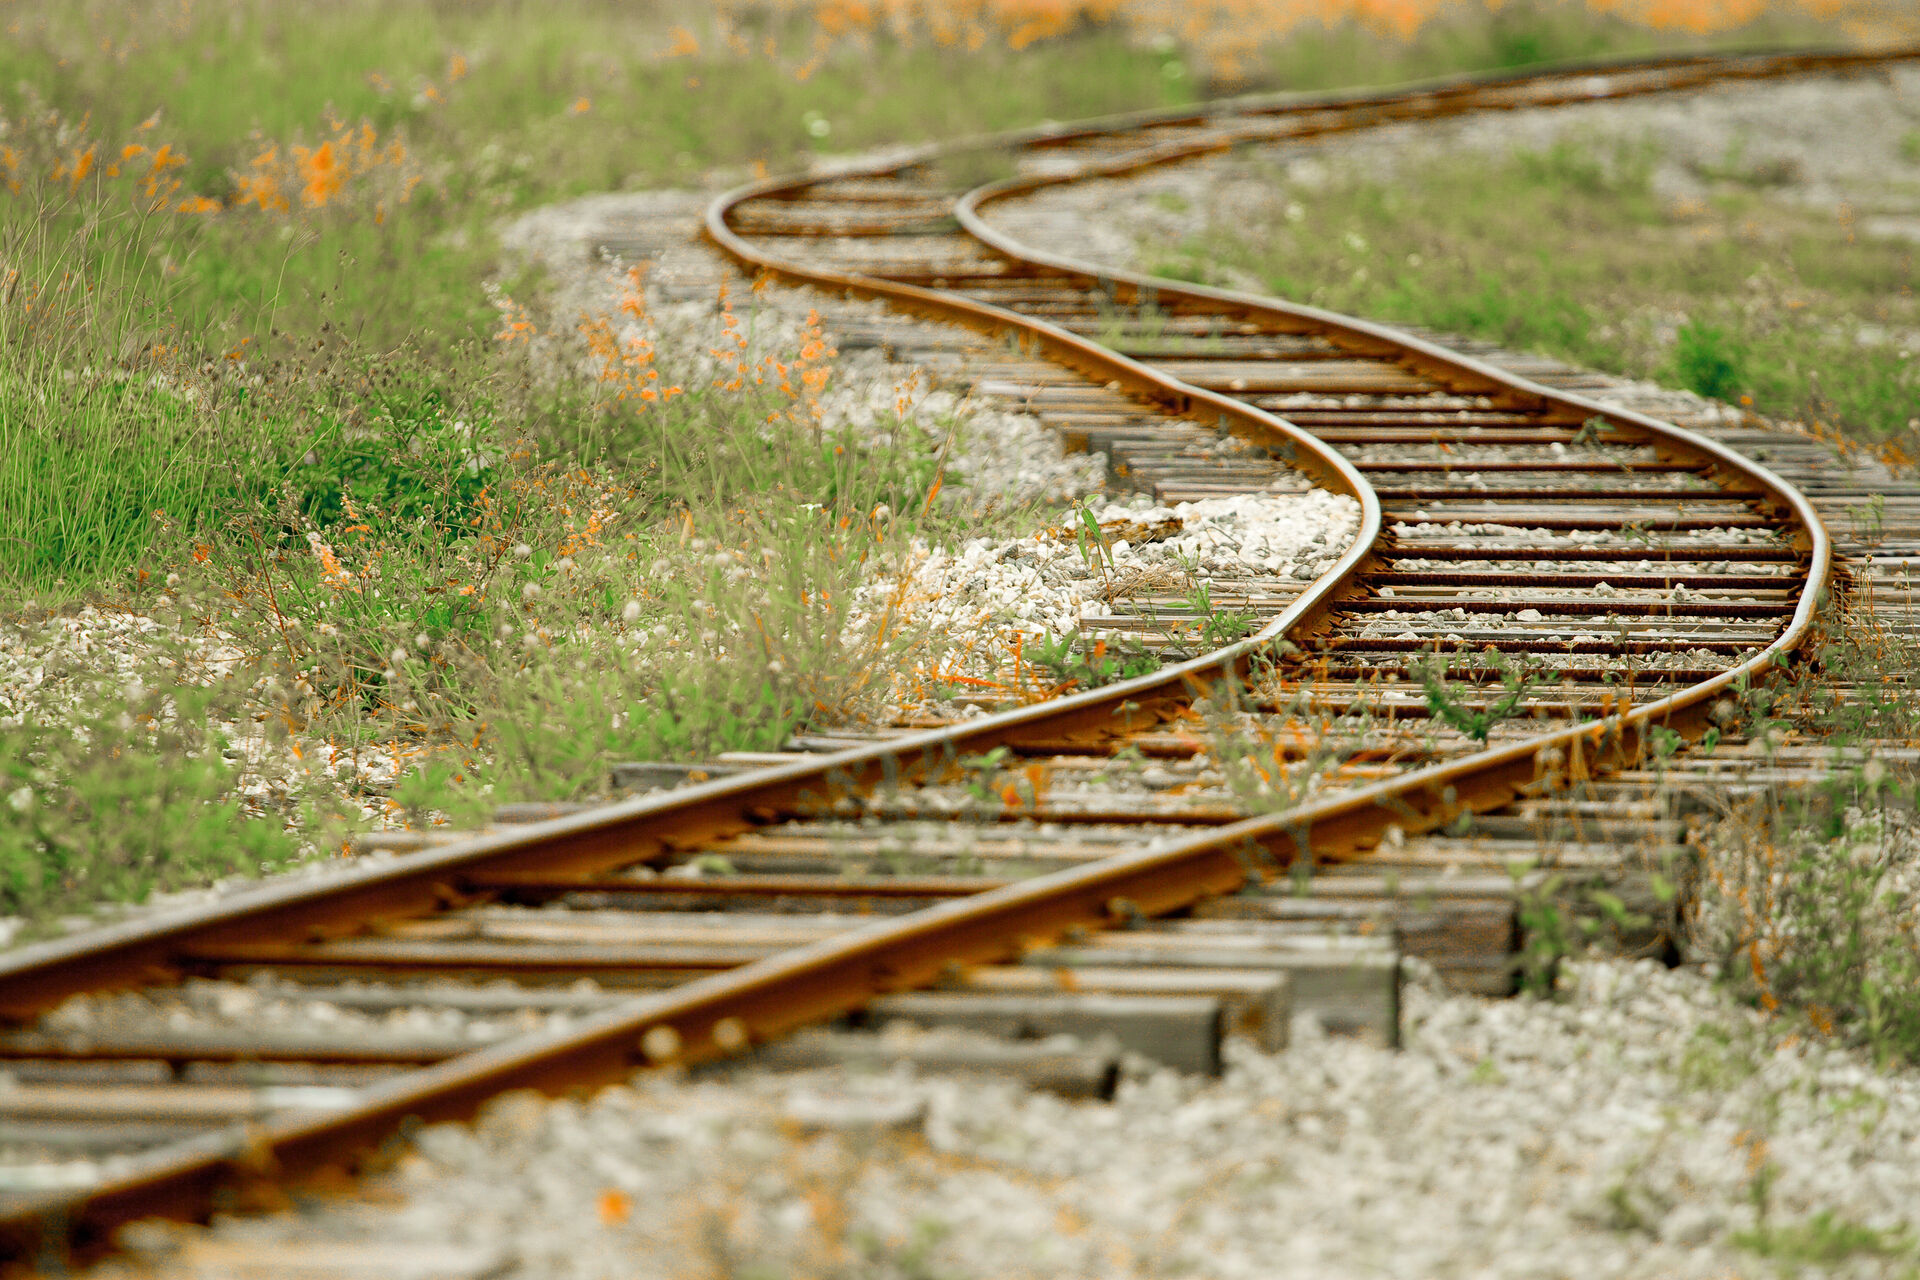 Abandoned rusty railway tracks in rural area